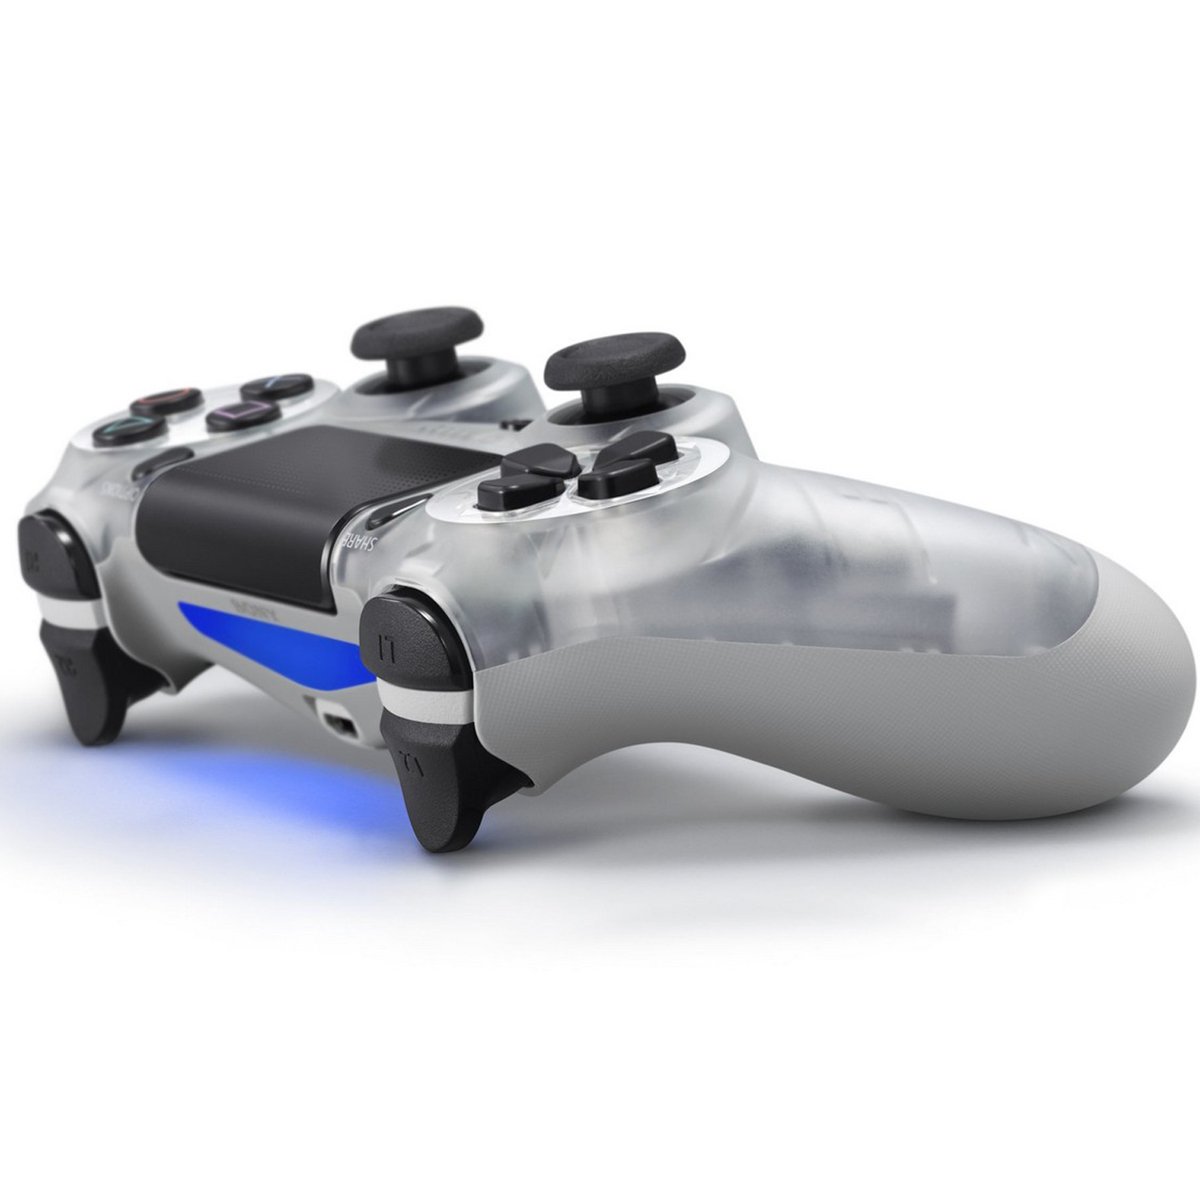 Sony DualShock 4 V2 Controller for PlayStation 4, Crystal